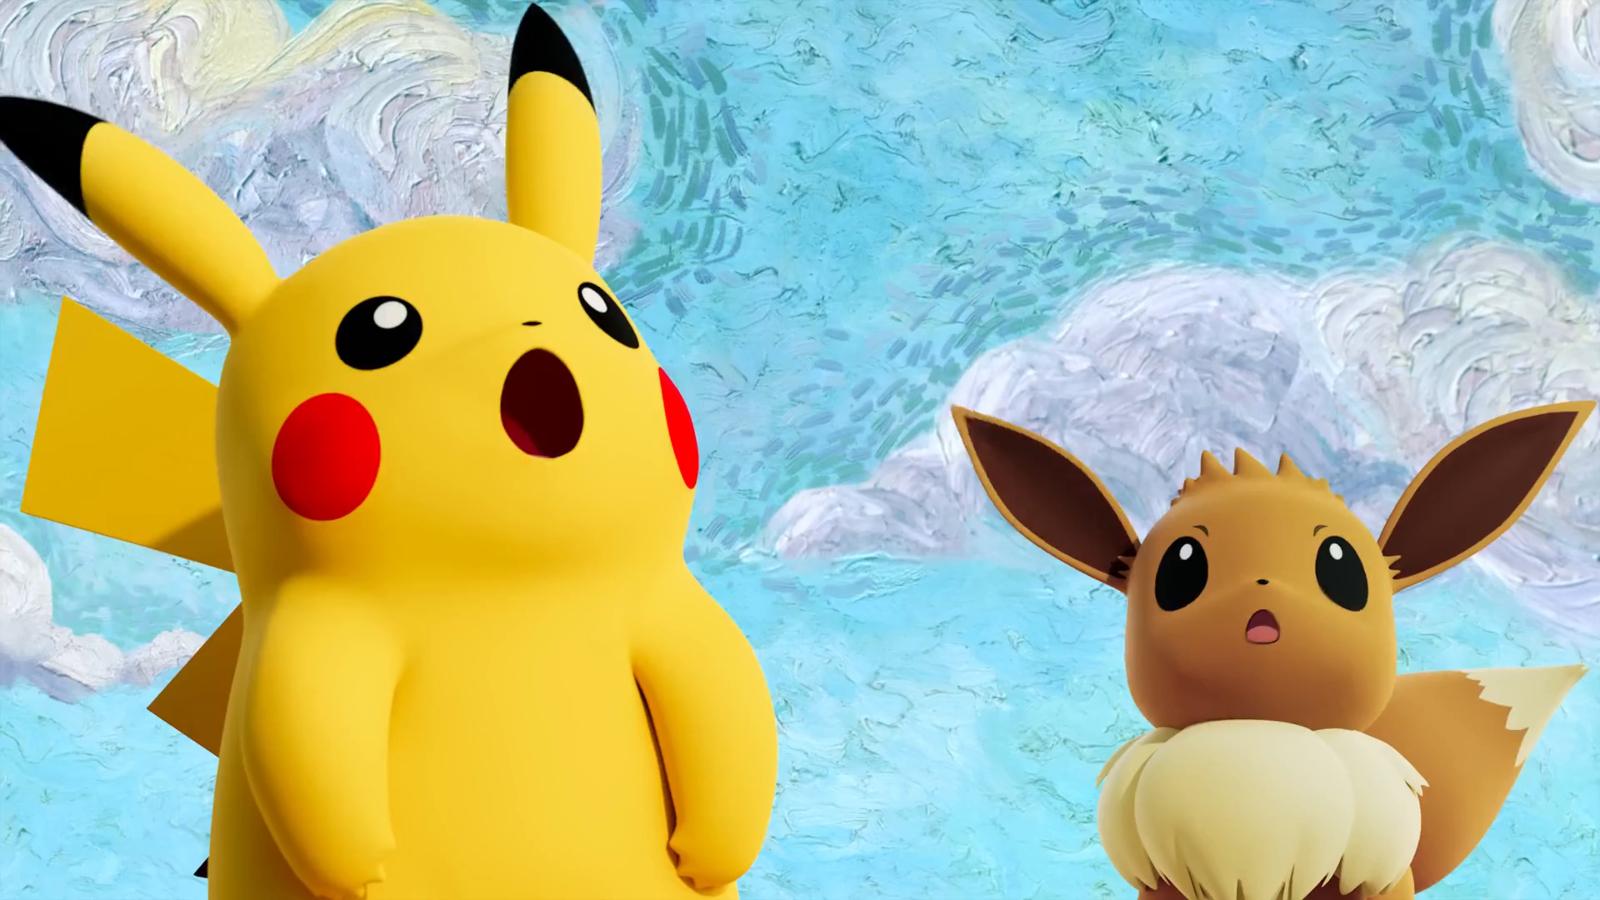 Pikachu and Eevee looking shocked in front of a Van Gogh style sky